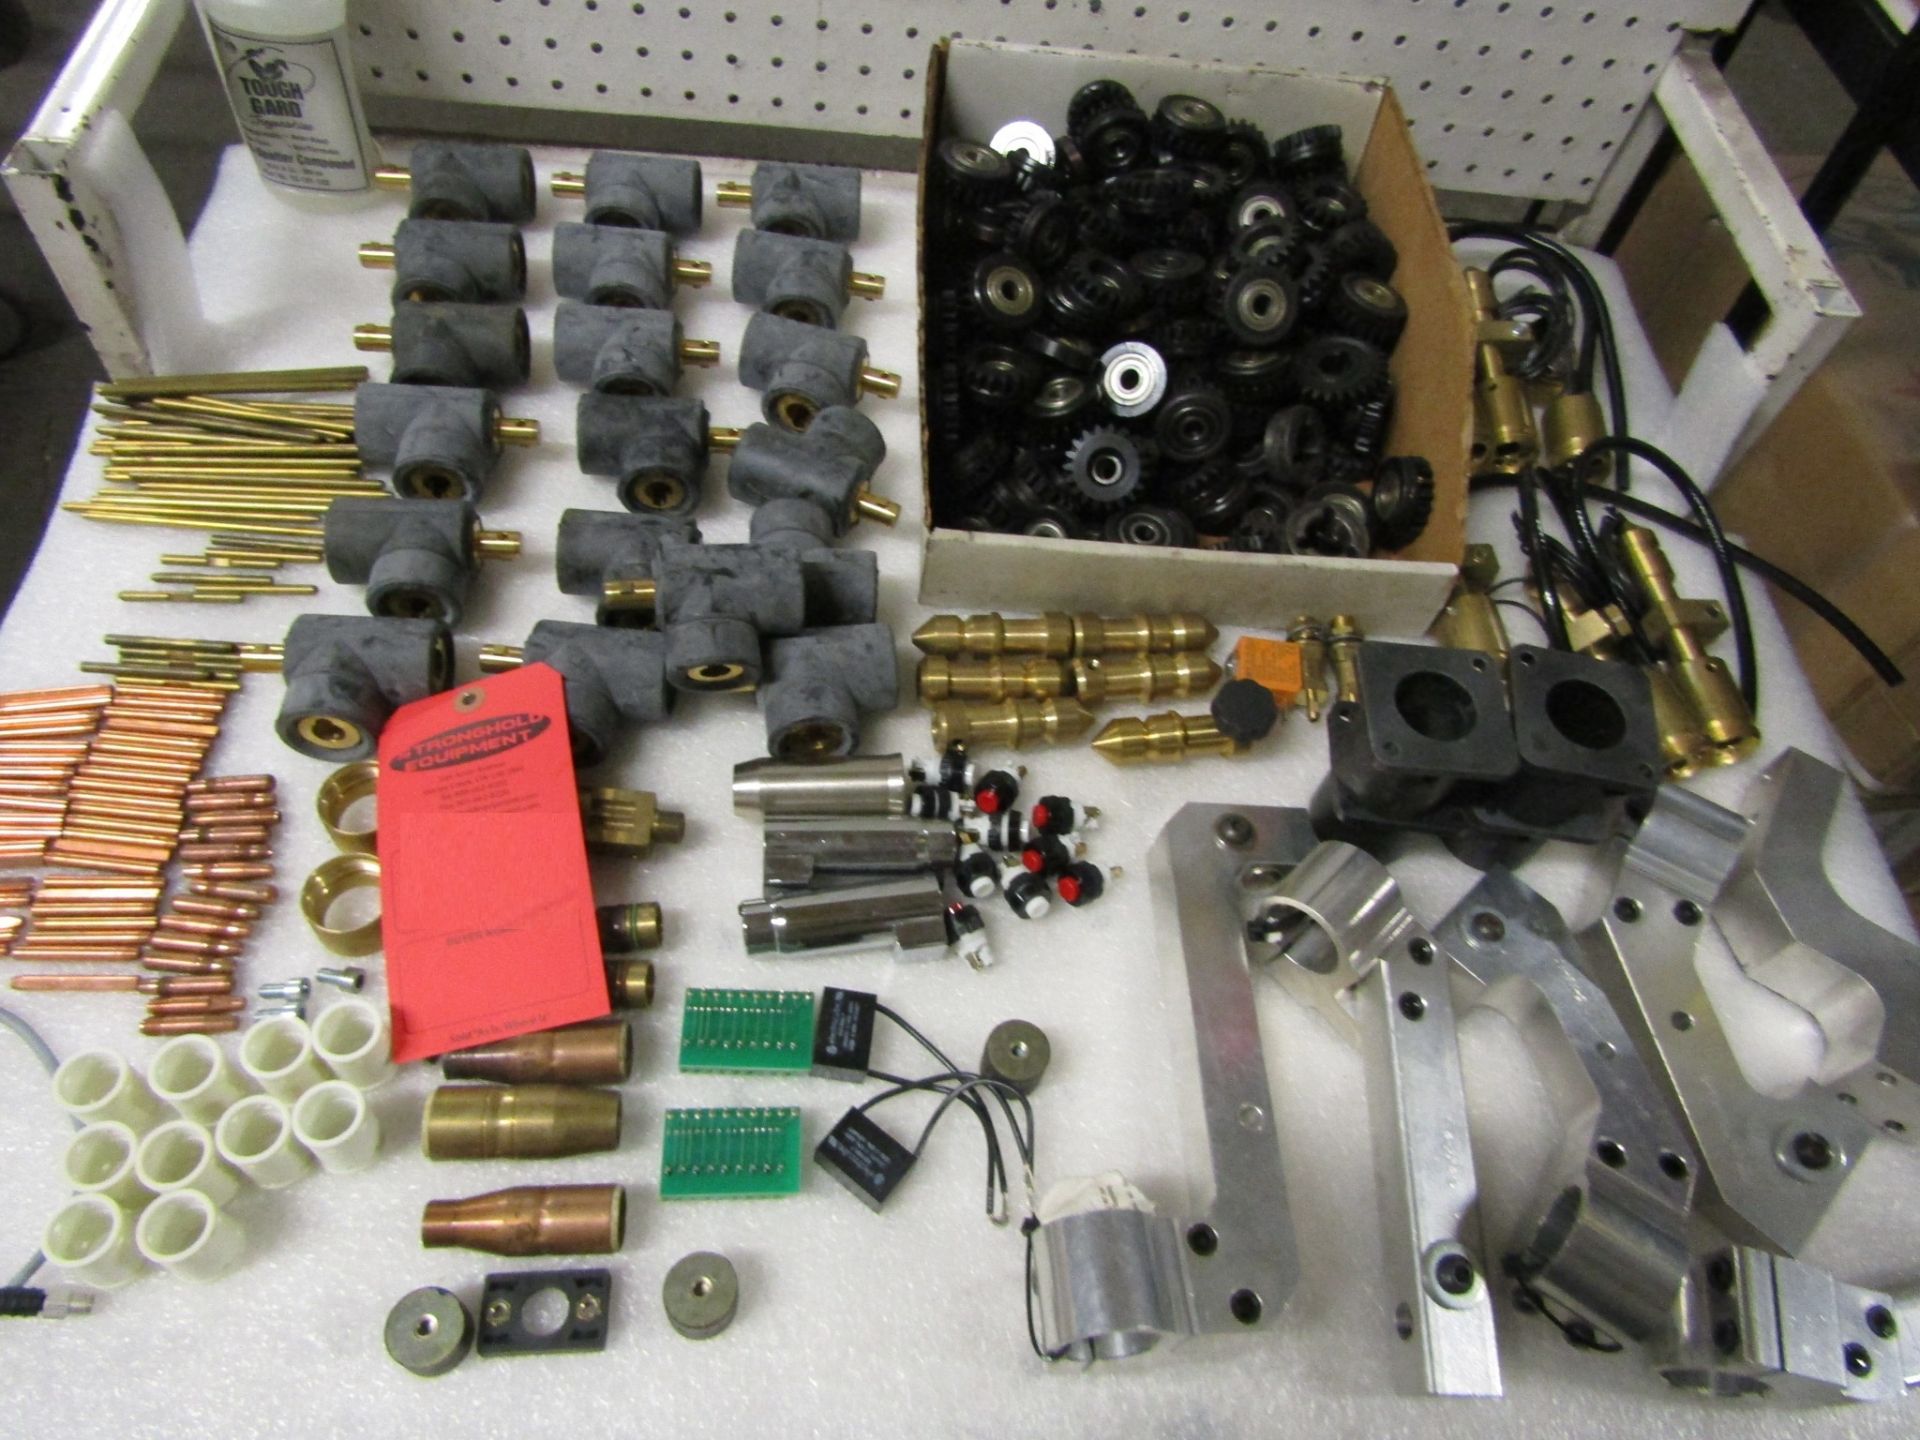 Assorted Welding Robot Parts - hundreds of wire wheels, nozzle tips, connectors, robotic arm